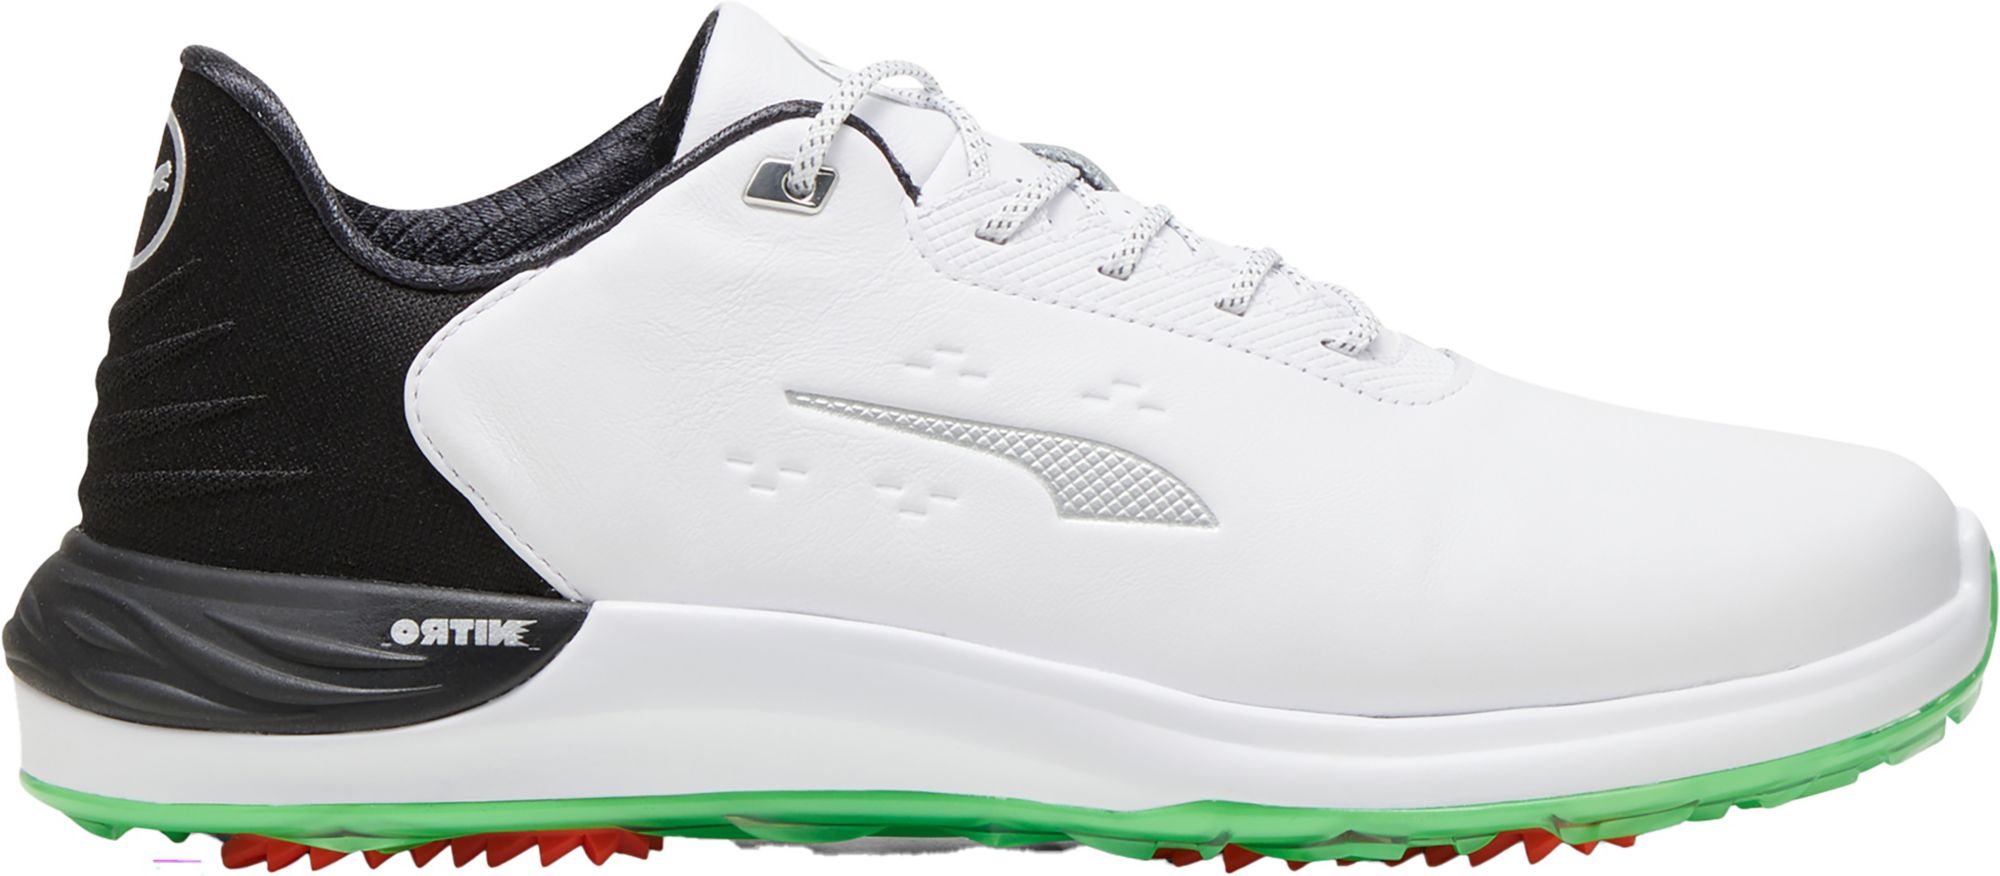 PUMA Men's Phantomcat Nitro Golf Shoes, Size 8, White/Black/Green